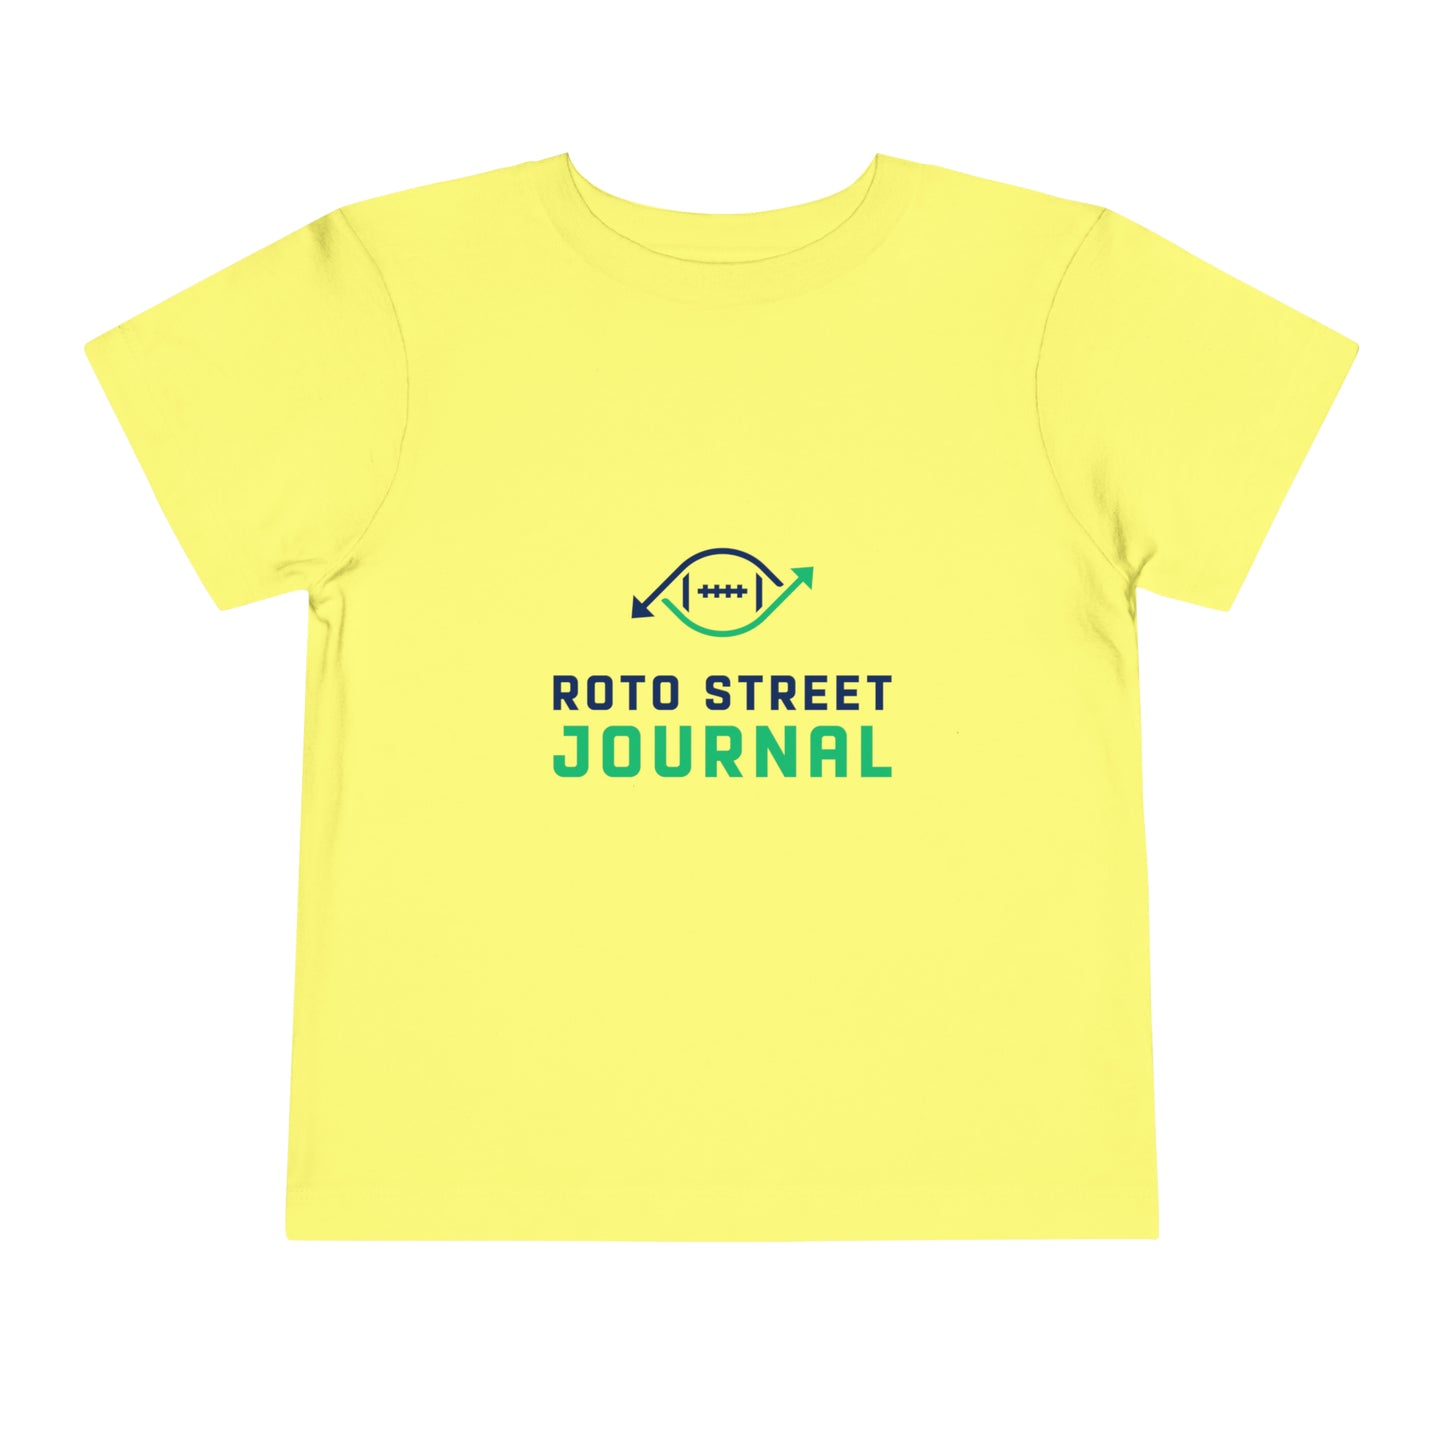 Roto Street Journal - Toddler Short Sleeve Tee